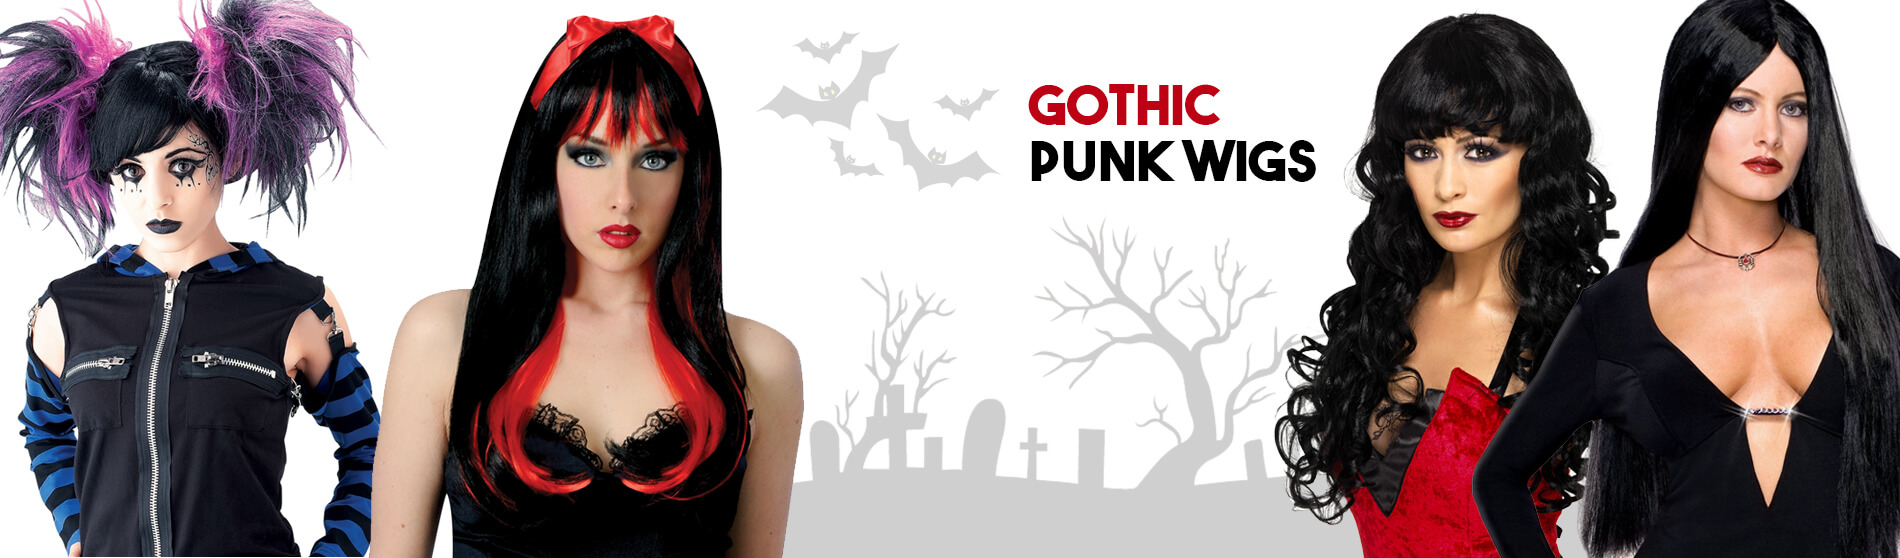 Glendale Halloween : Gothic-Punk-Wigs